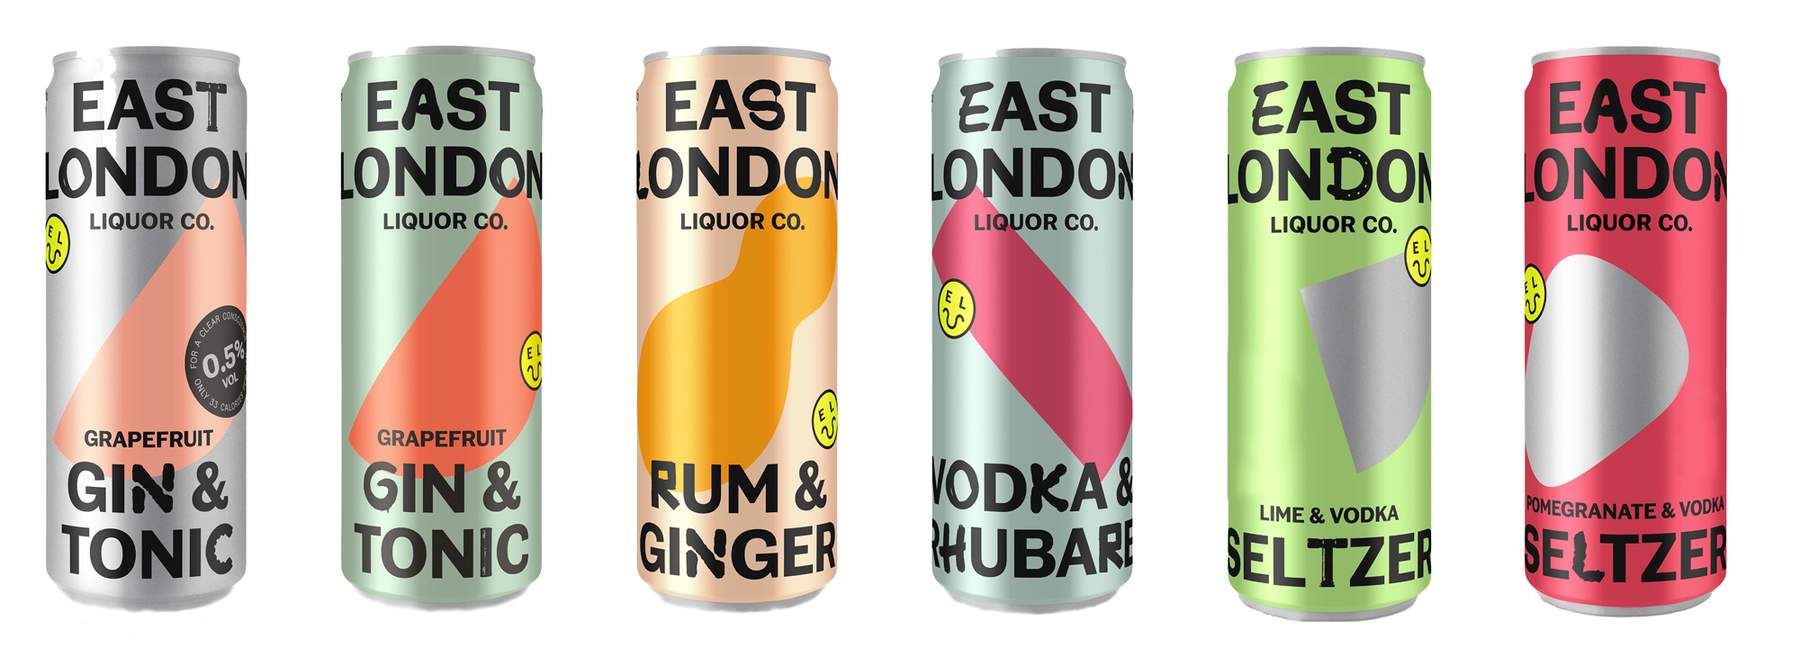 east_london_liquor_co_packaging_cans_plain_02.jpg